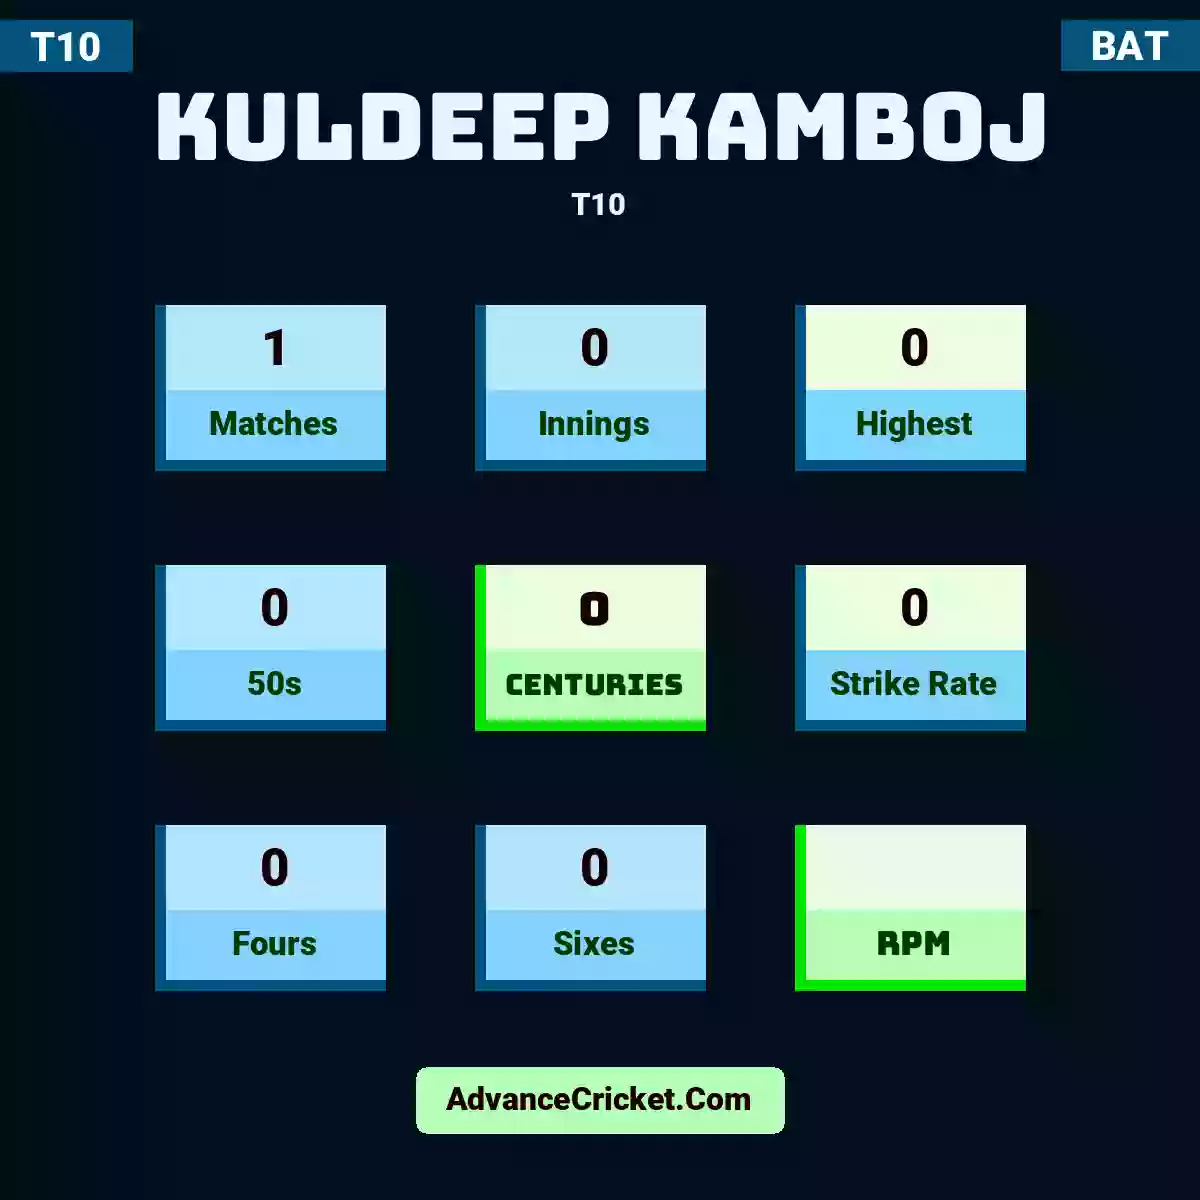 Kuldeep Kamboj T10 , Kuldeep Kamboj played 1 matches, scored 0 runs as highest, 0 half-centuries, and 0 centuries, with a strike rate of 0. K.Kamboj hit 0 fours and 0 sixes.